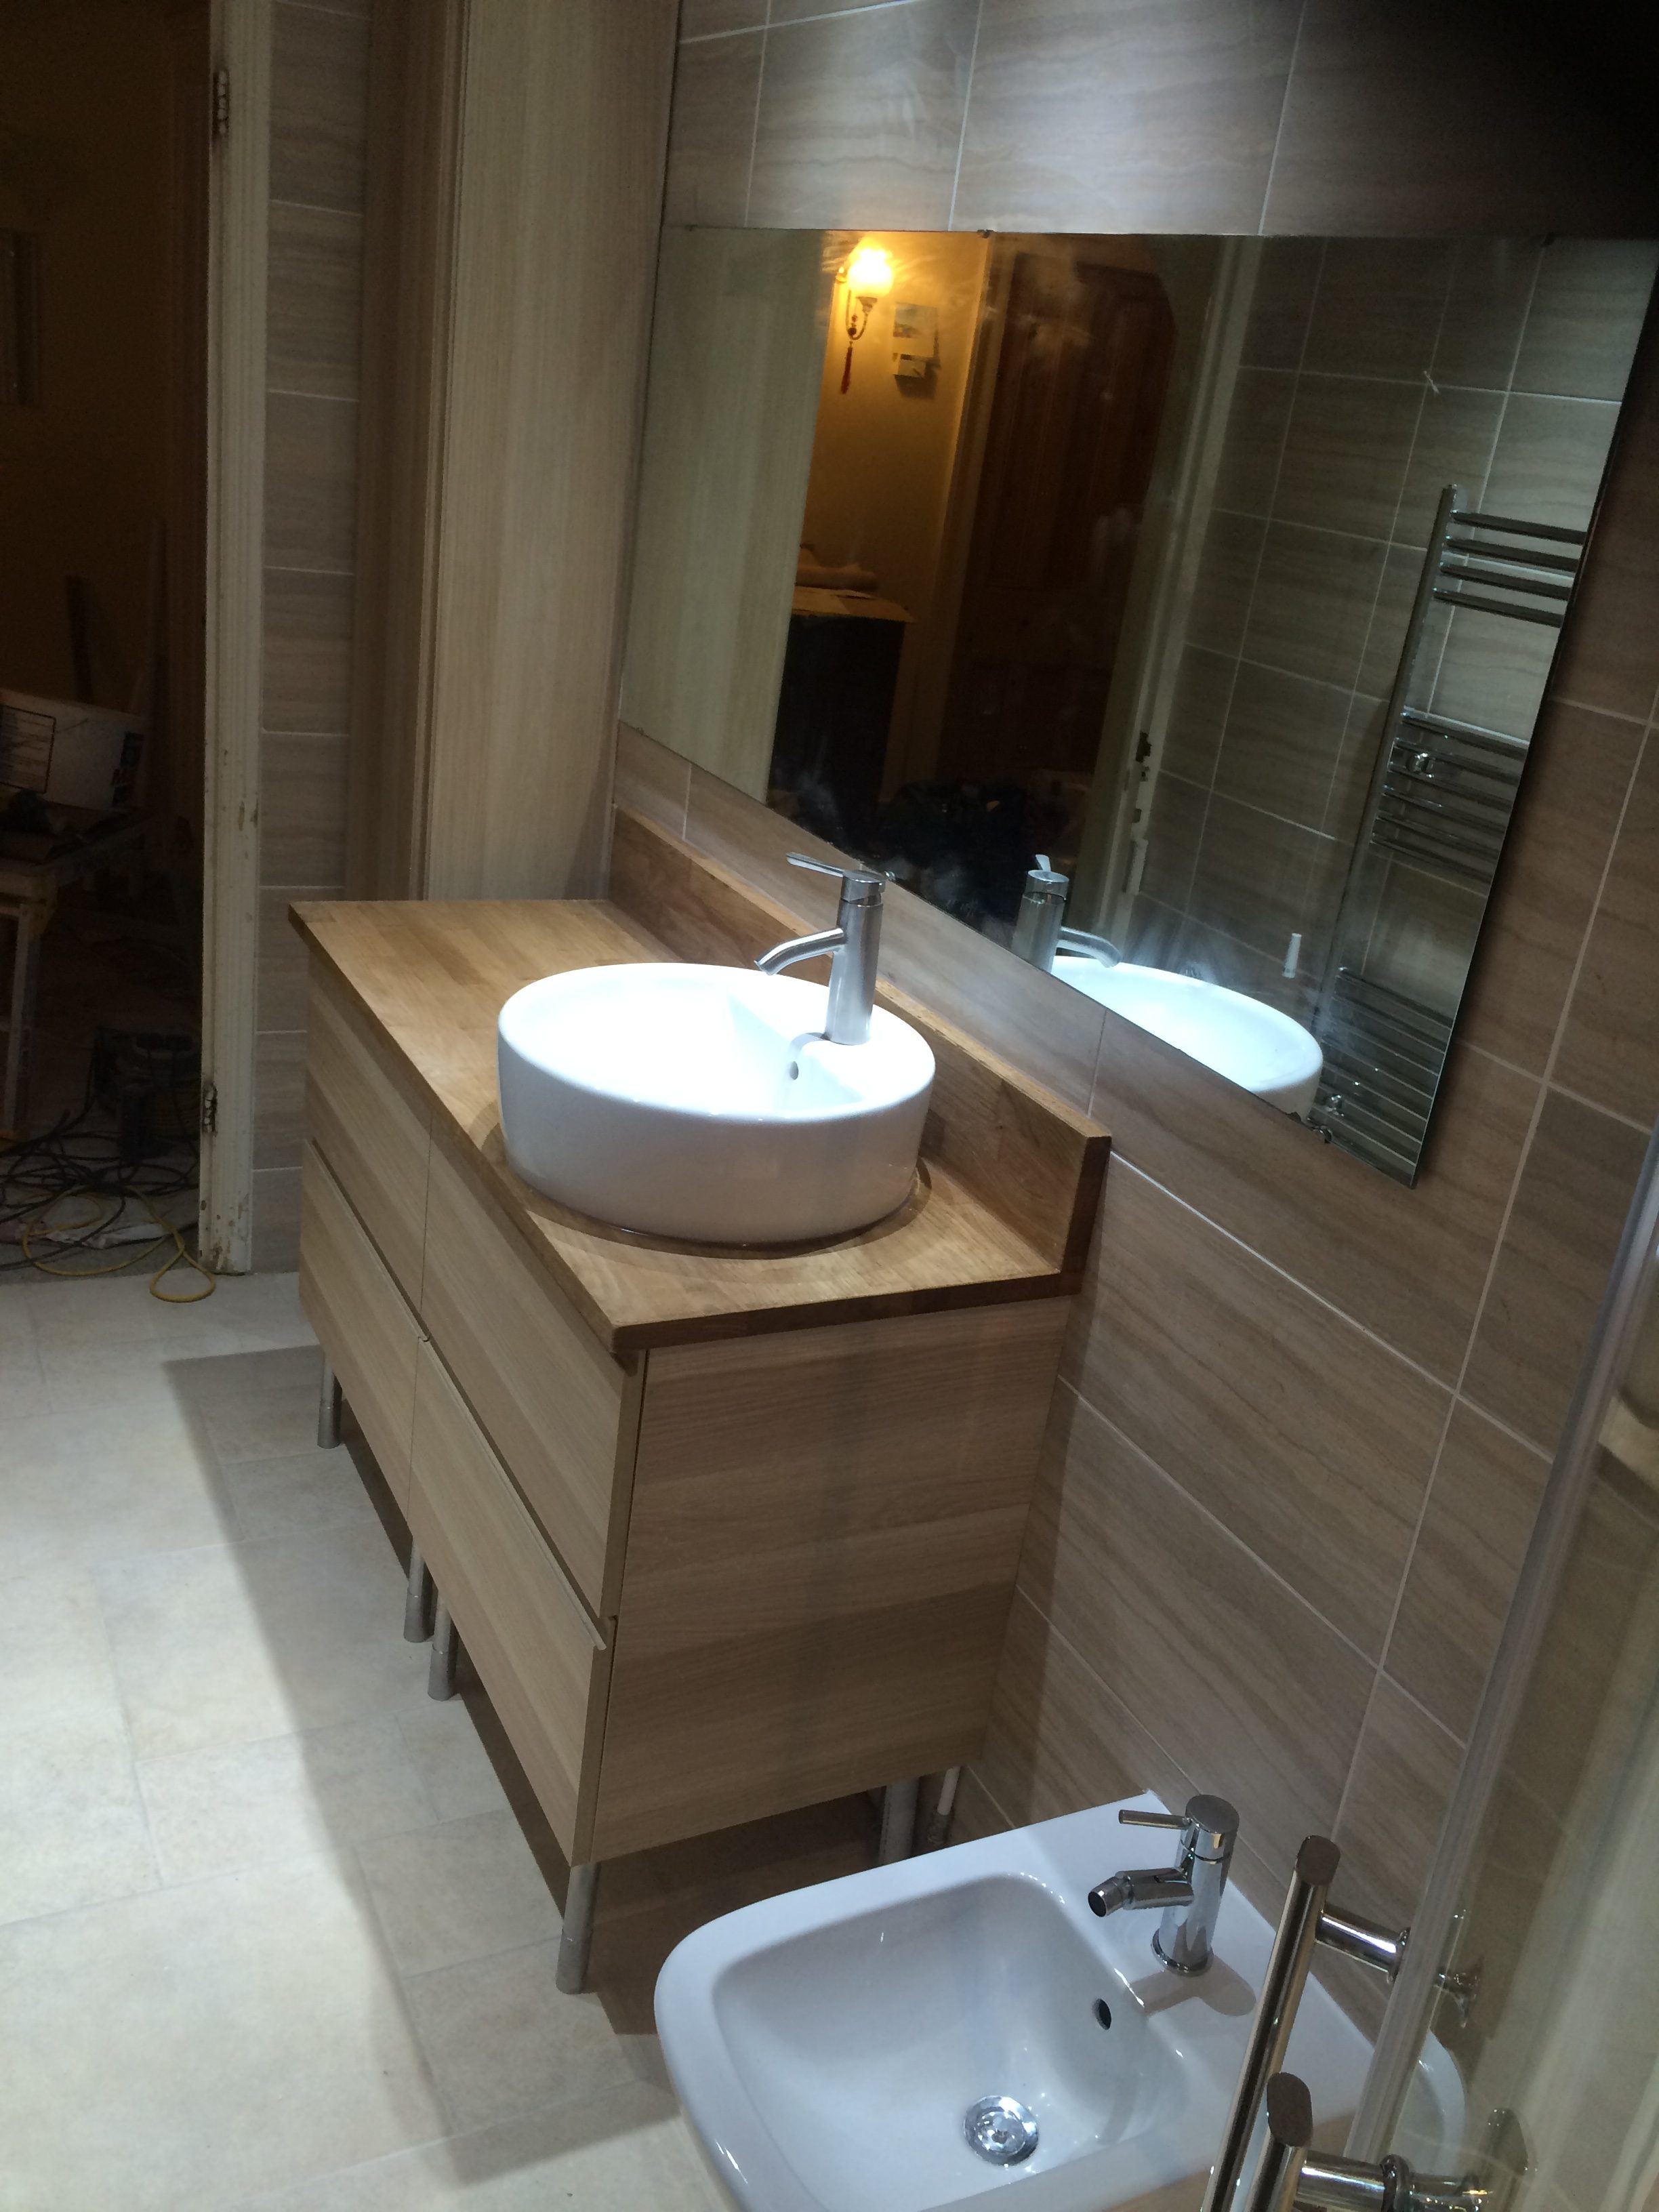 sink in modern, wooden themed bathroom